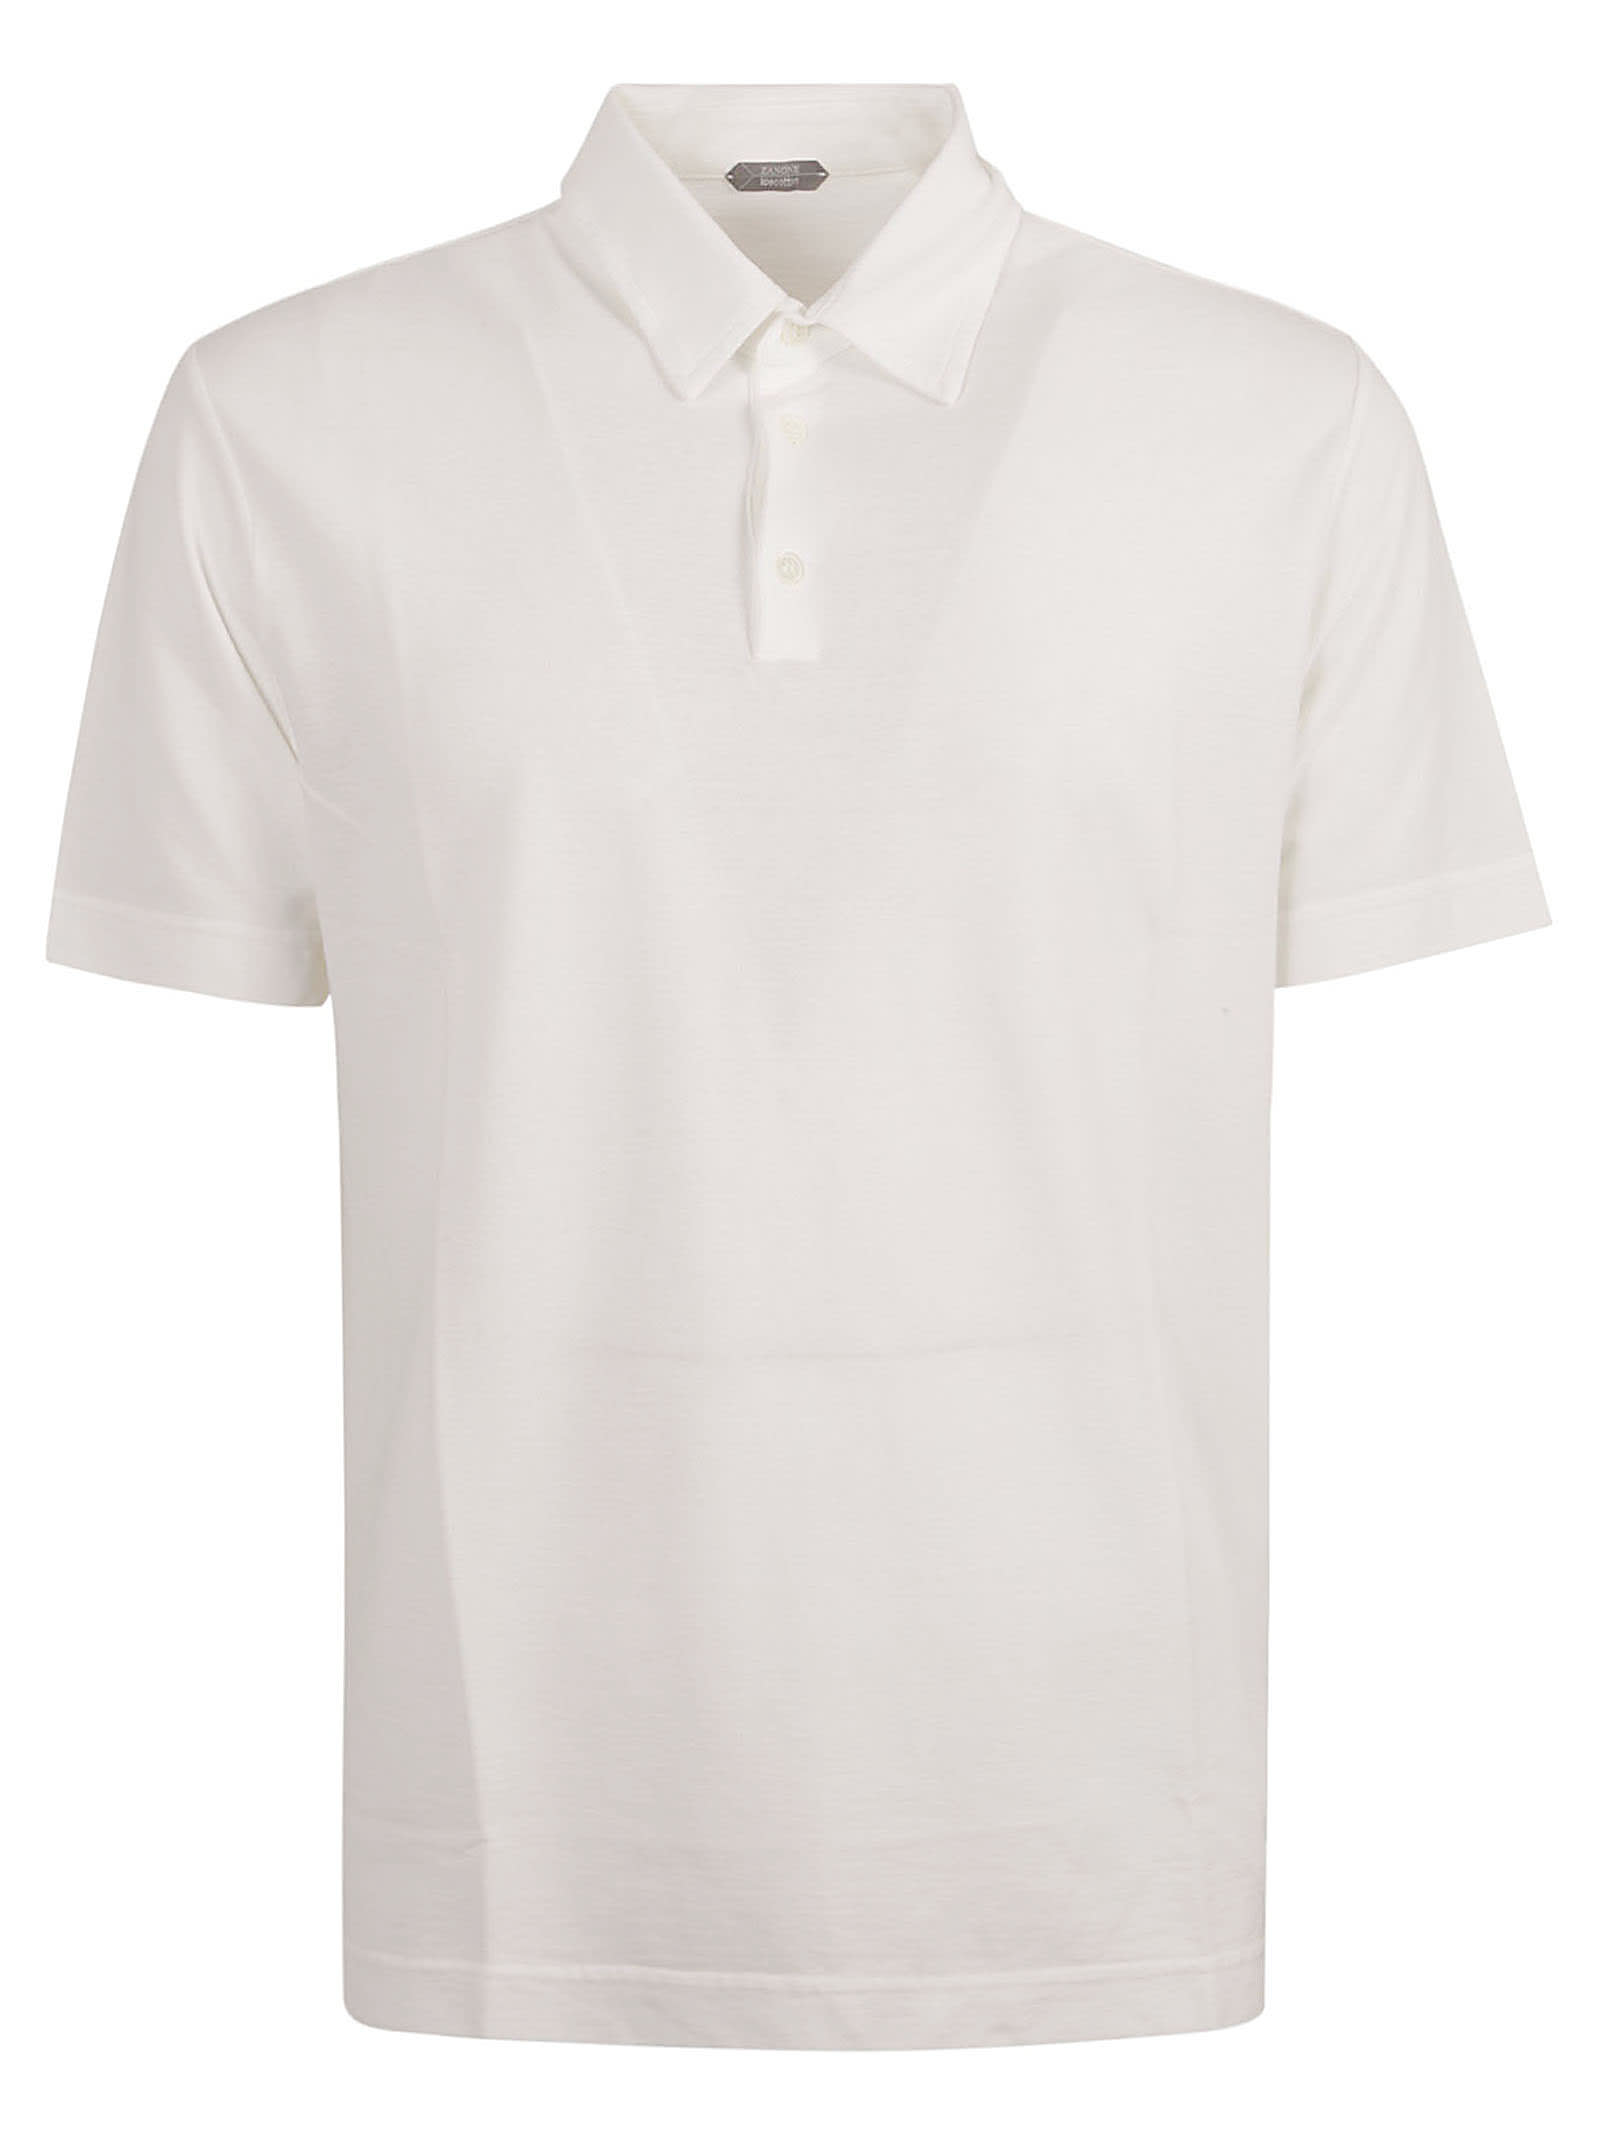 Regular Plain Polo Shirt